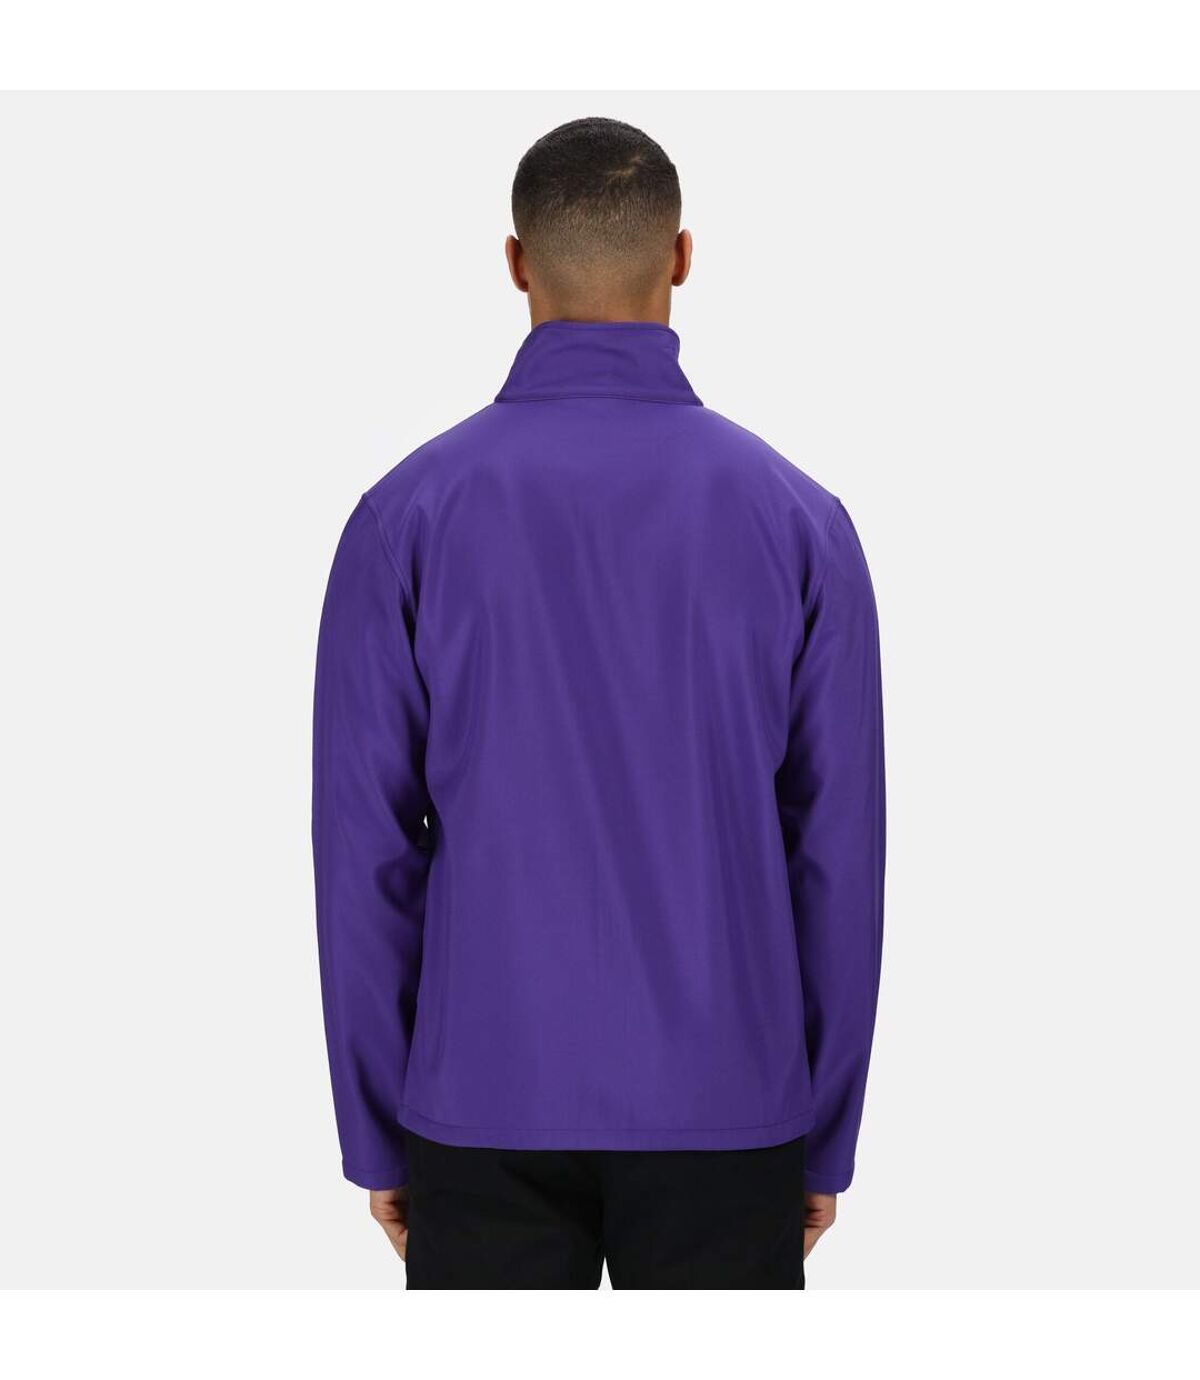 Regatta Standout Mens Ablaze Printable Softshell Jacket (Vibrant Purple)